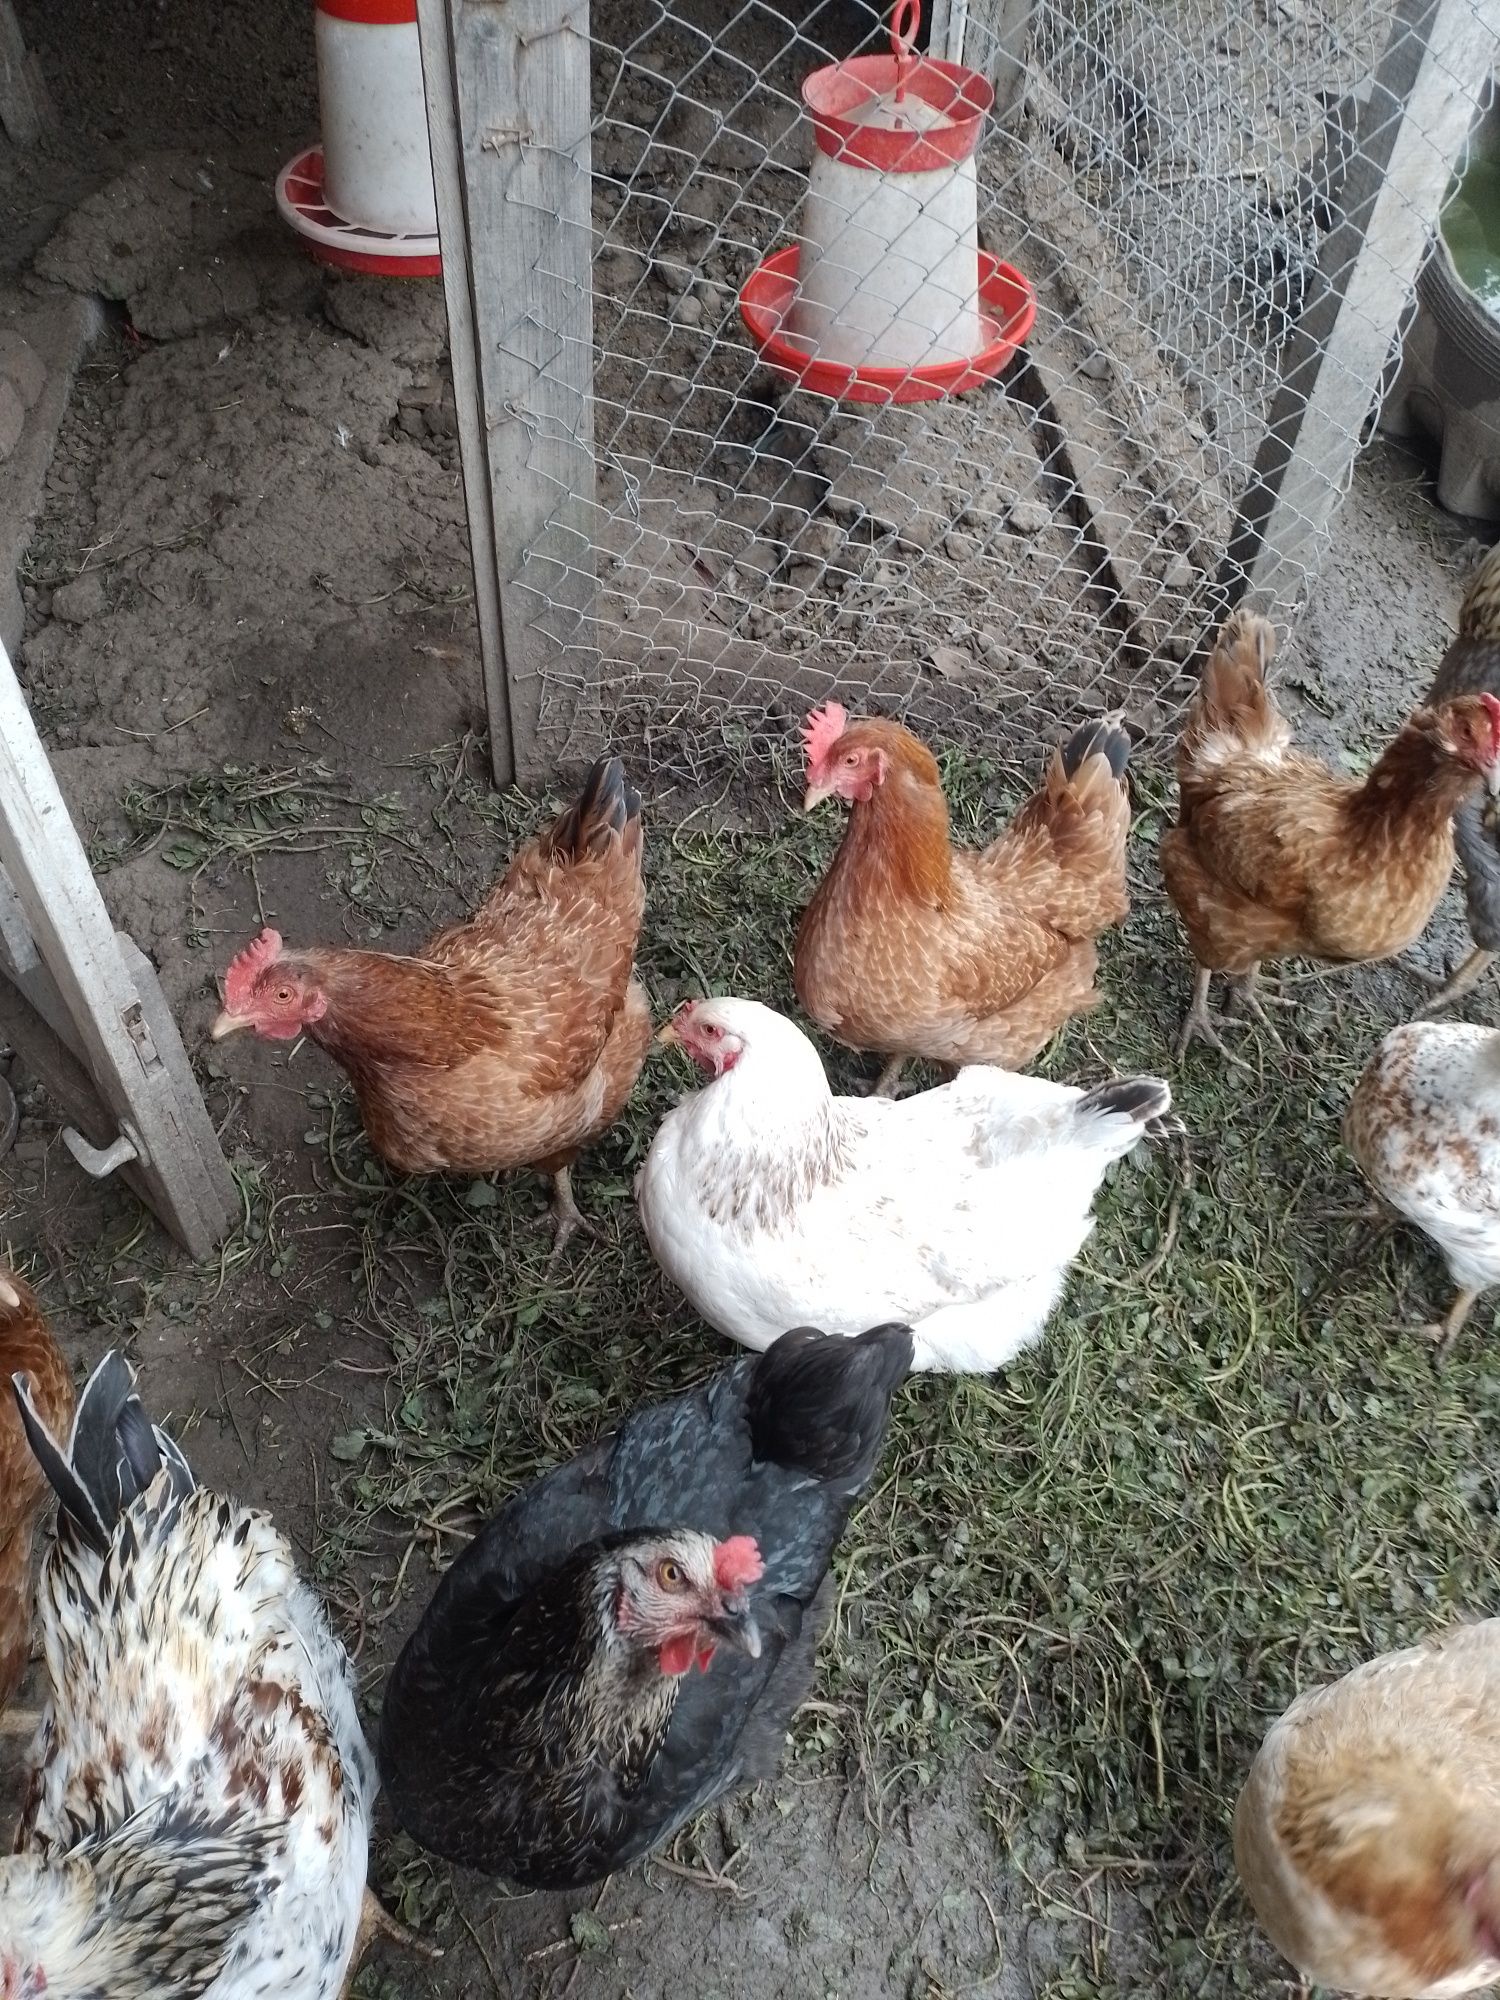 Домашни яйца от свободни кокошки